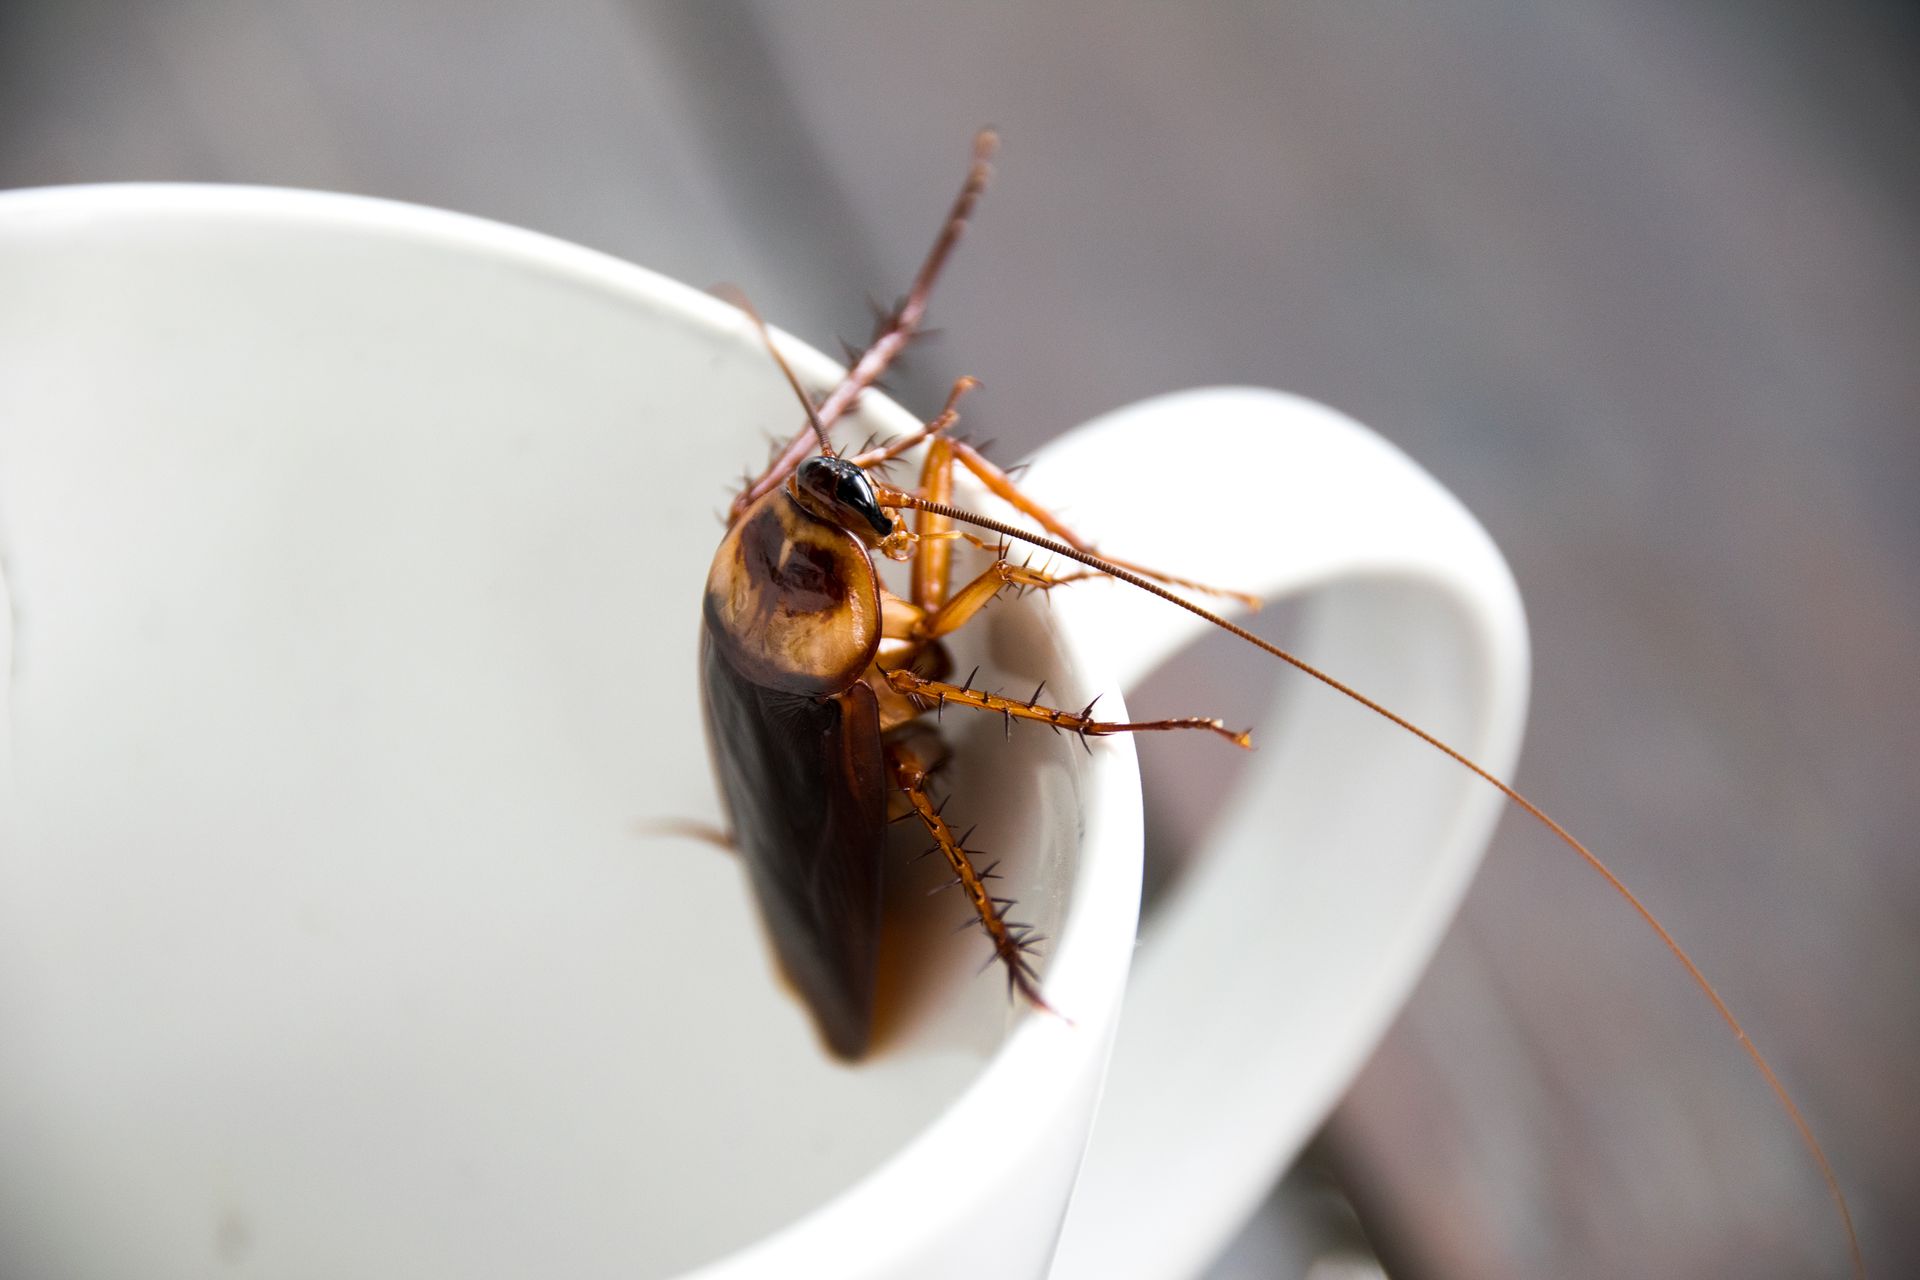 roach in coffee mug extermination